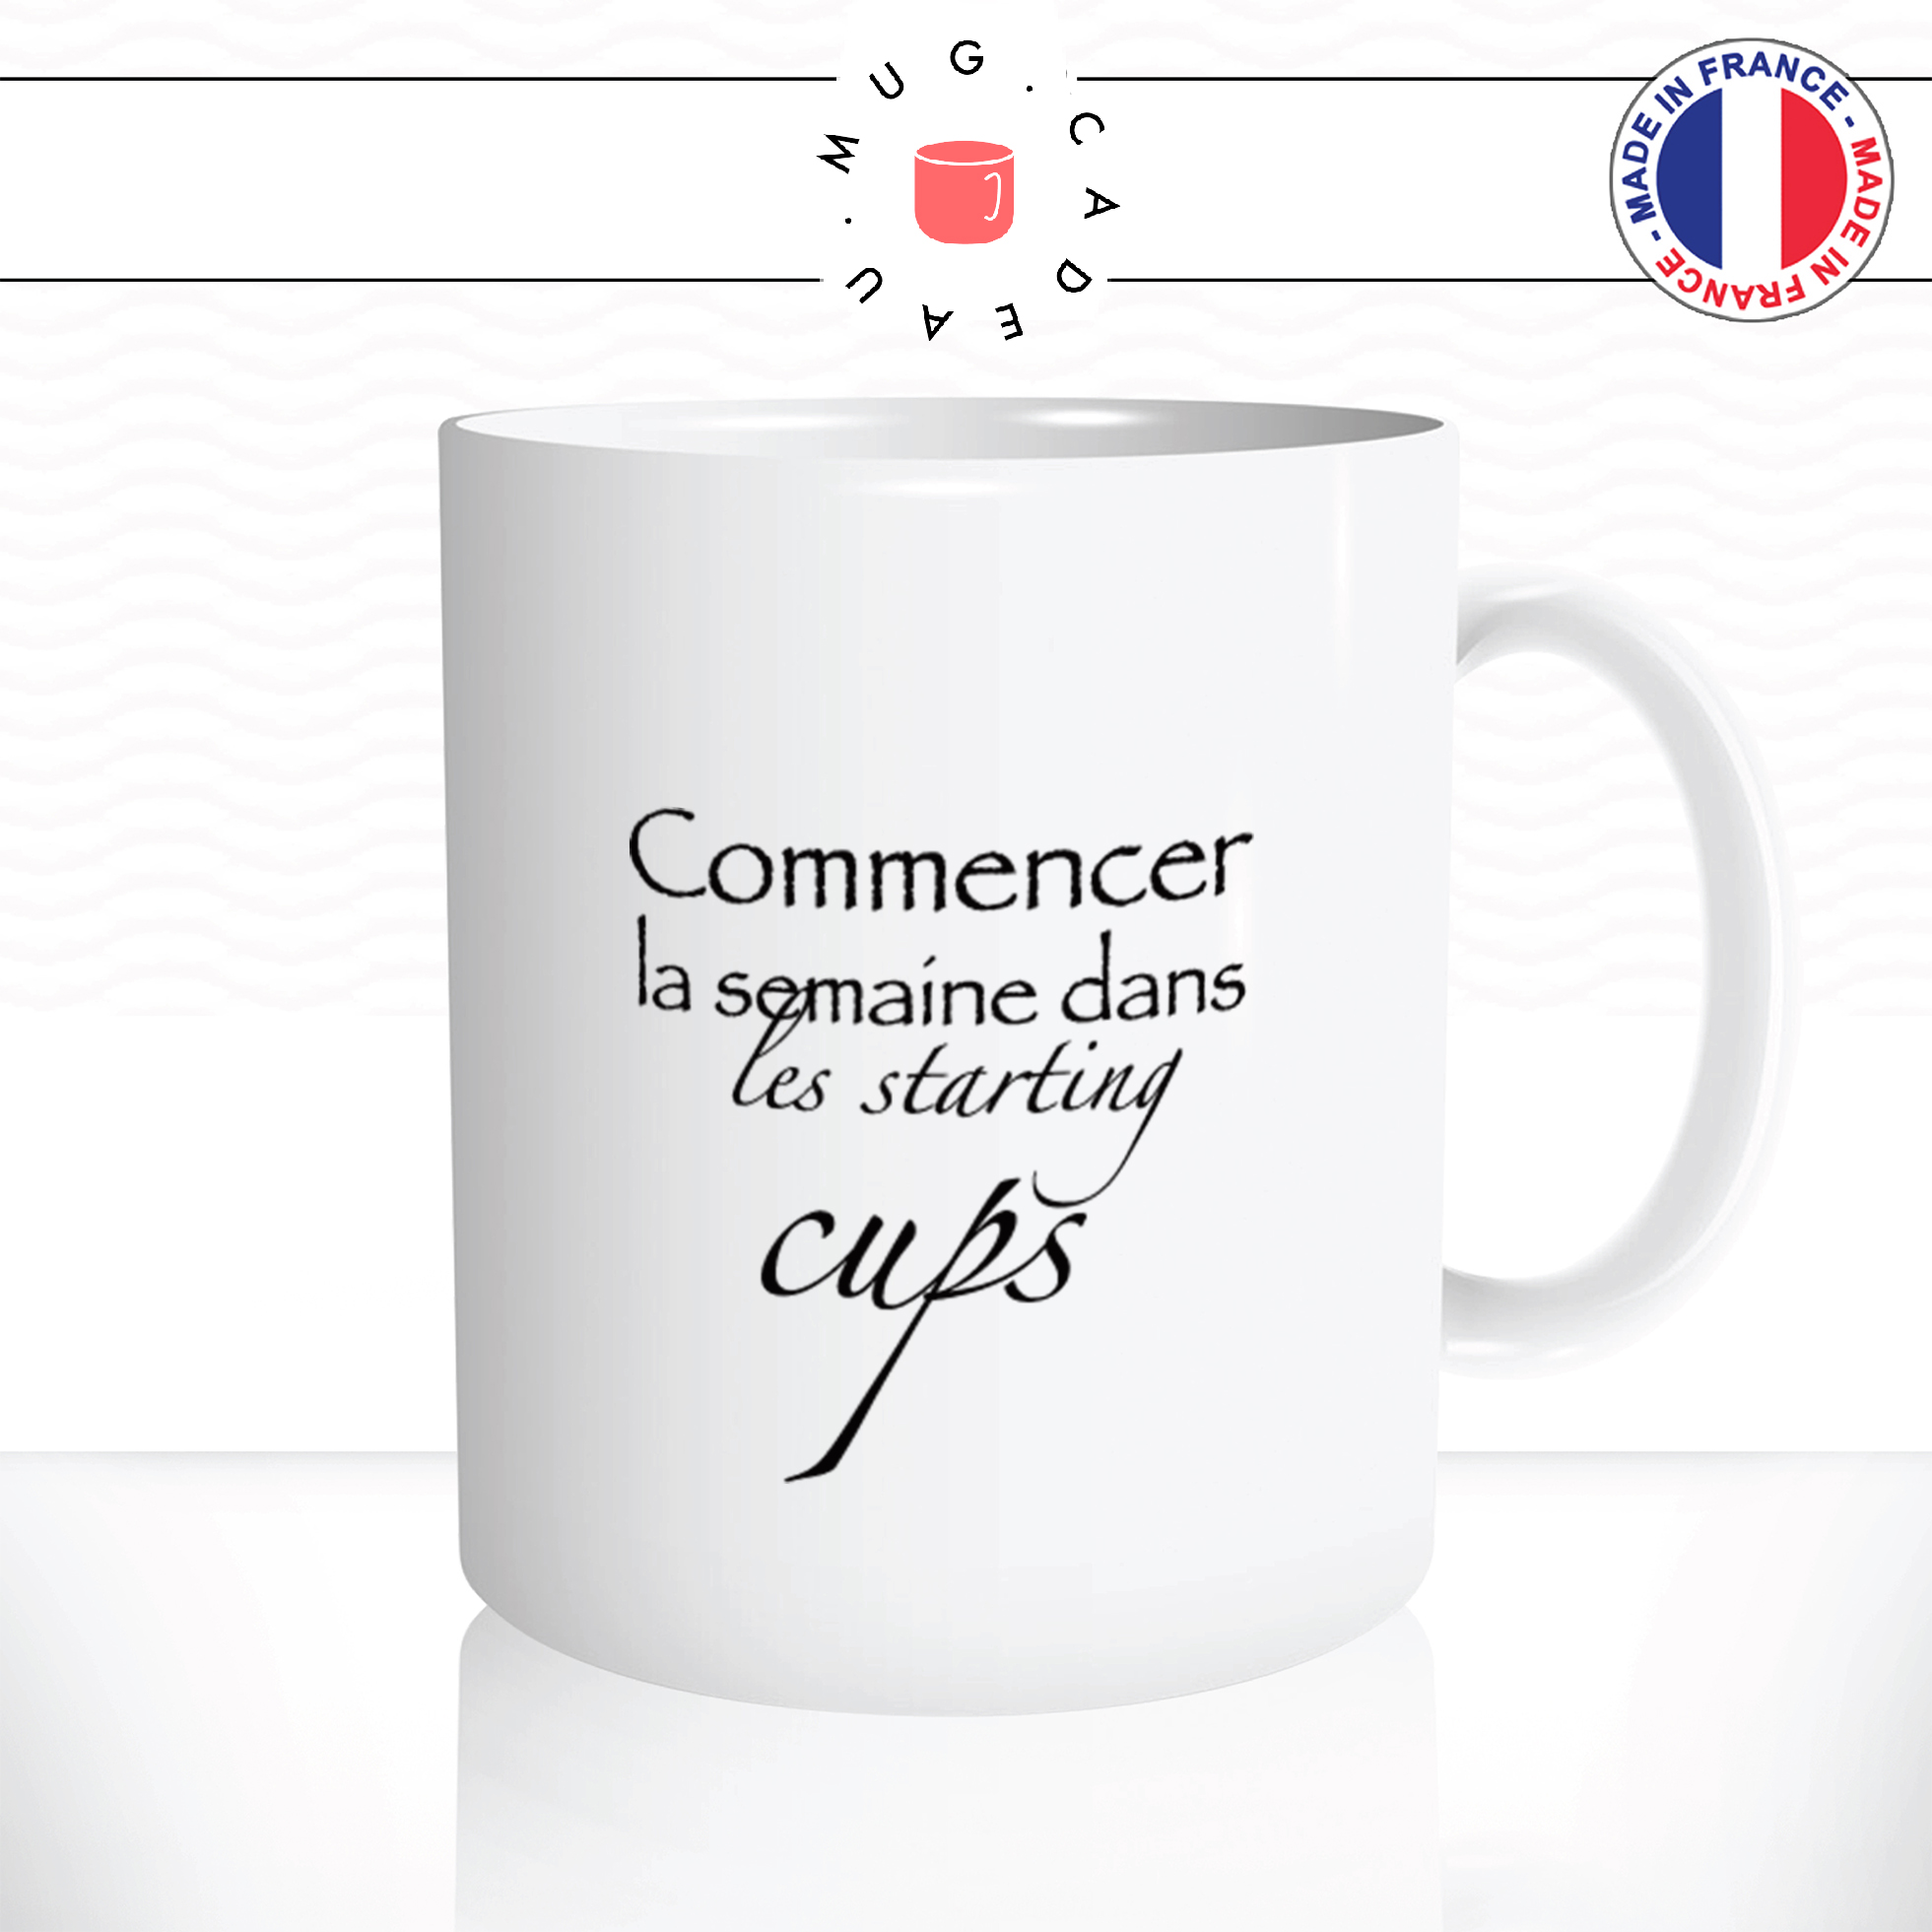 mug-tasse-ref67-citation-motivation-starting-cups-cafe-the-mugs-tasses-cadeau-personnalise-anse-droite